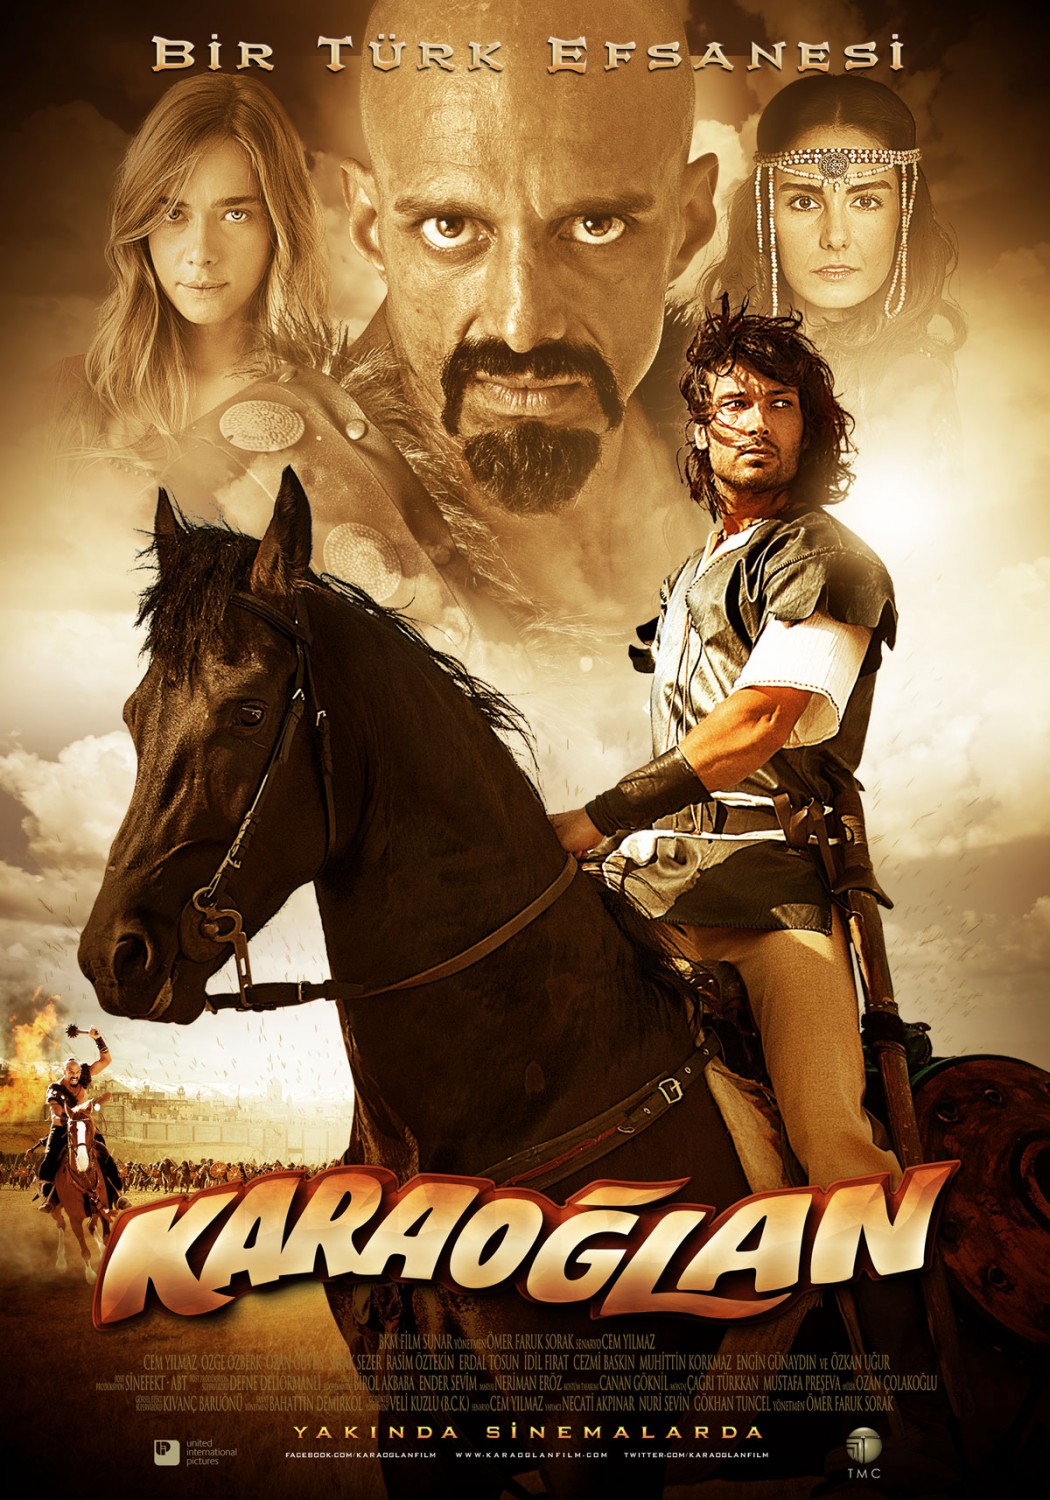 Extra Large Movie Poster Image for Karaoglan (#5 of 5)